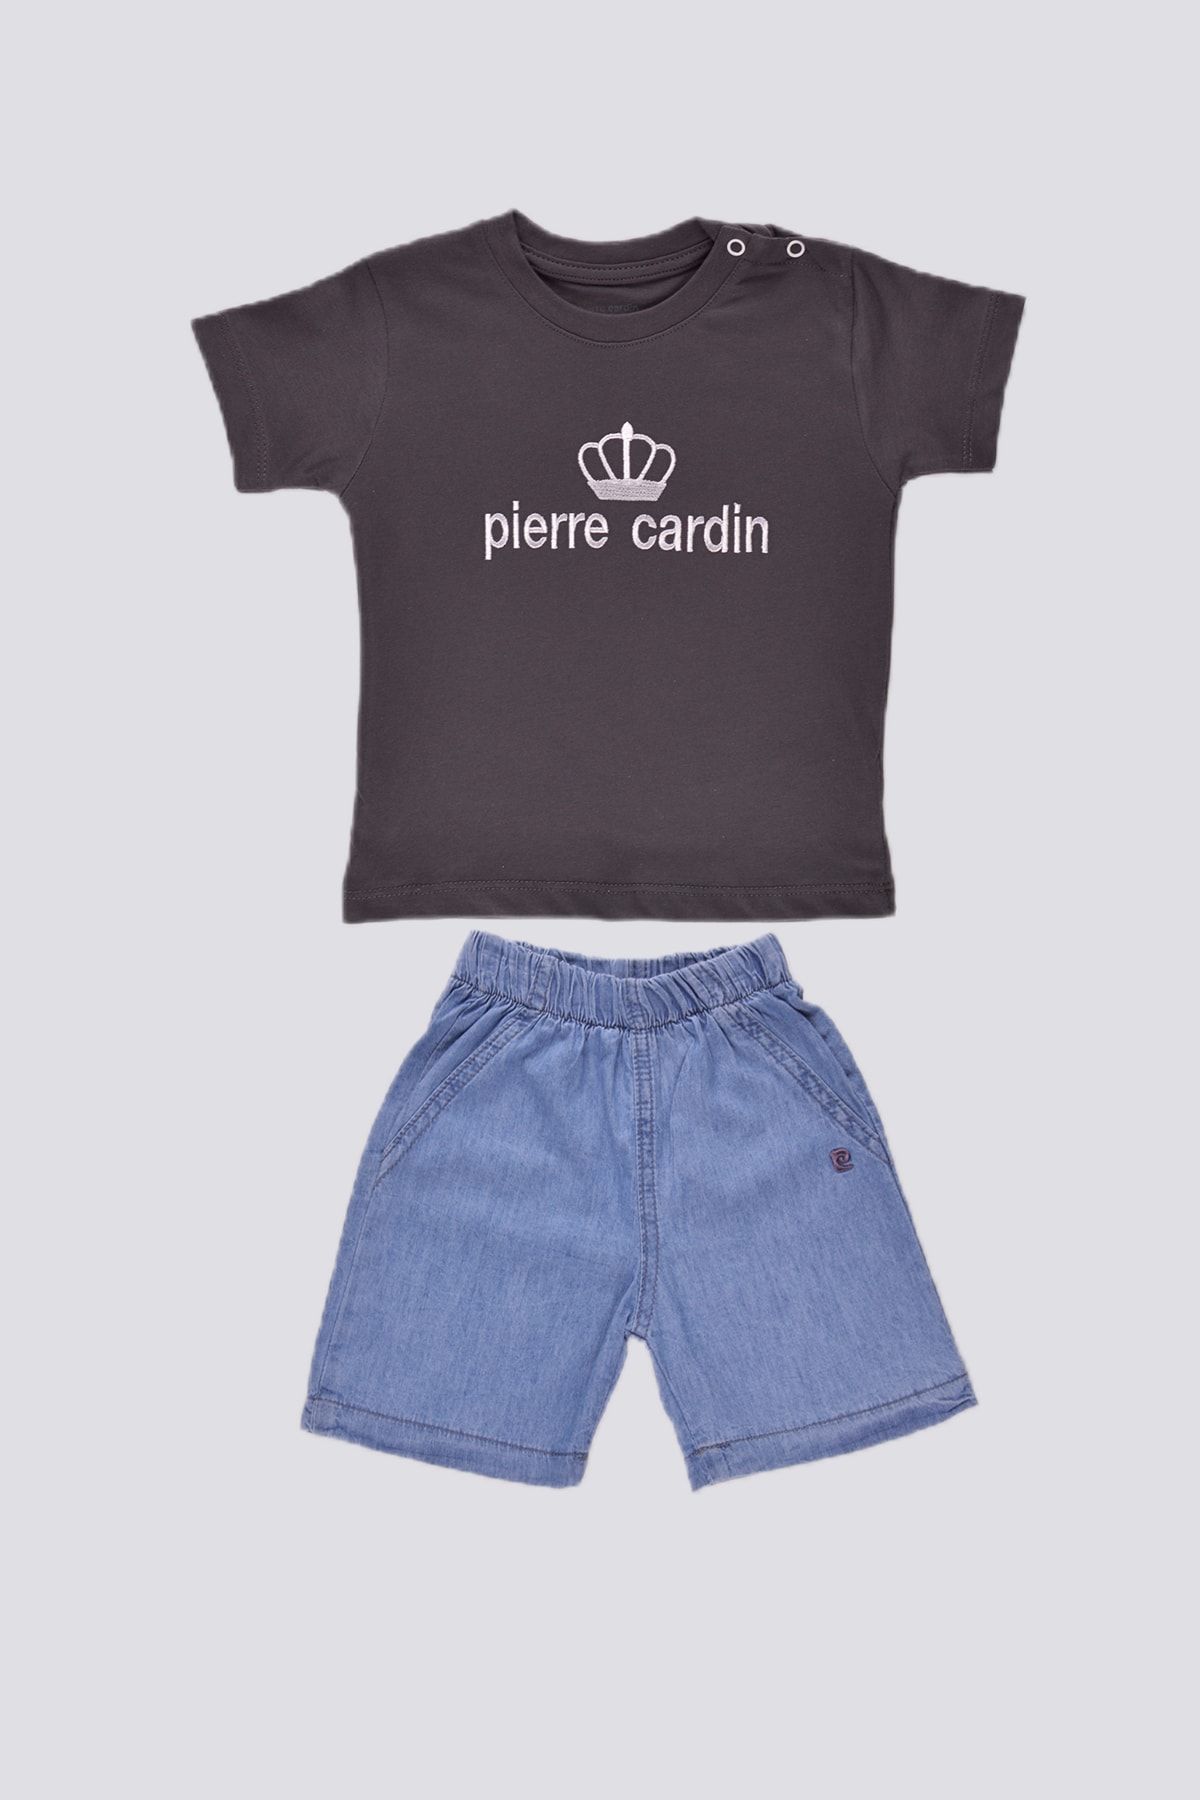 Pierre Cardin 303030 Pc Kot Sortlu Takım